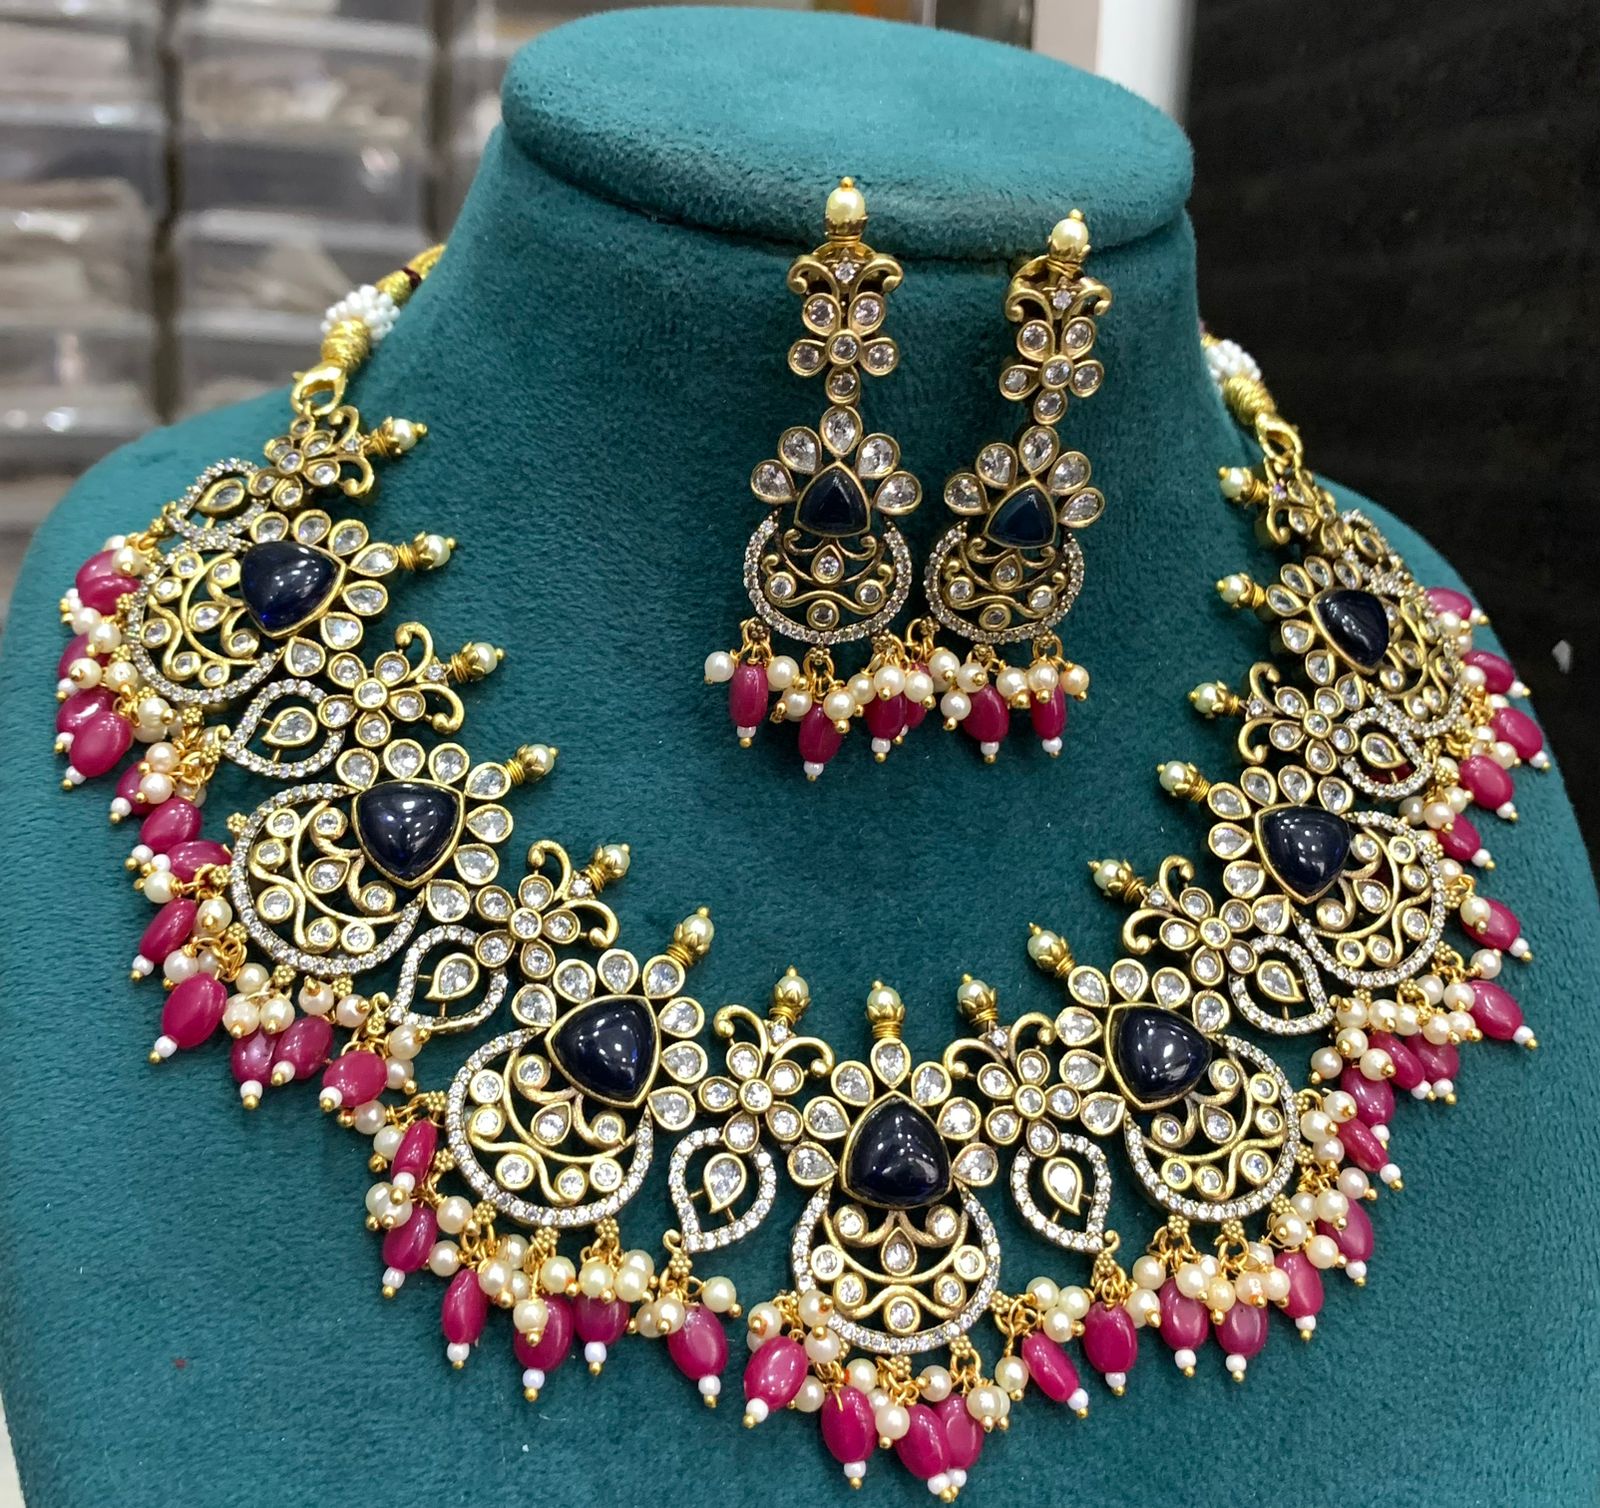 Premium Antique Victorian Jewelry Finish Necklace set 13776N